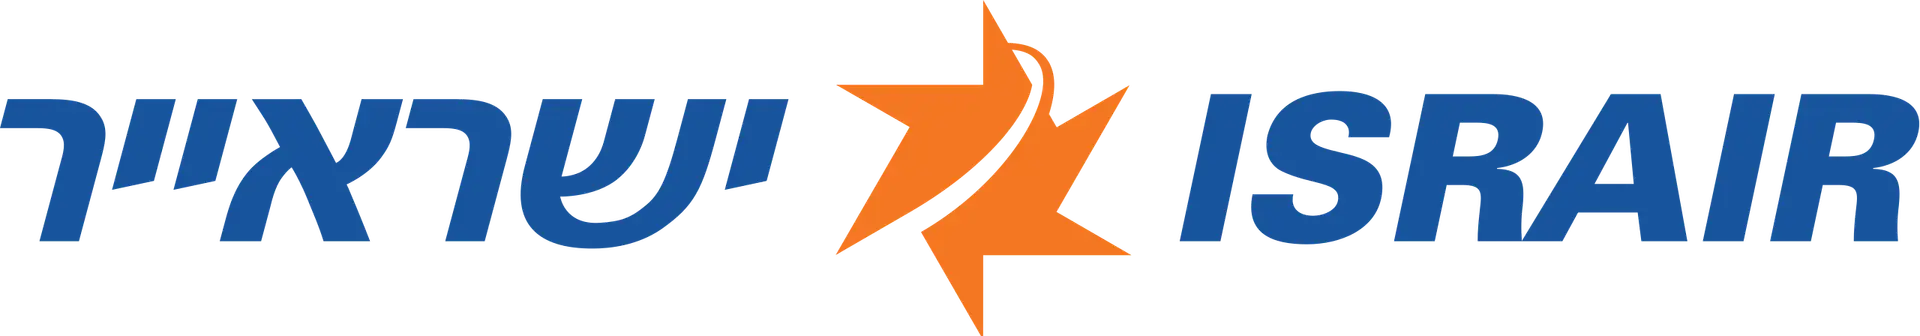 Israir_Airlines_Logo.svg